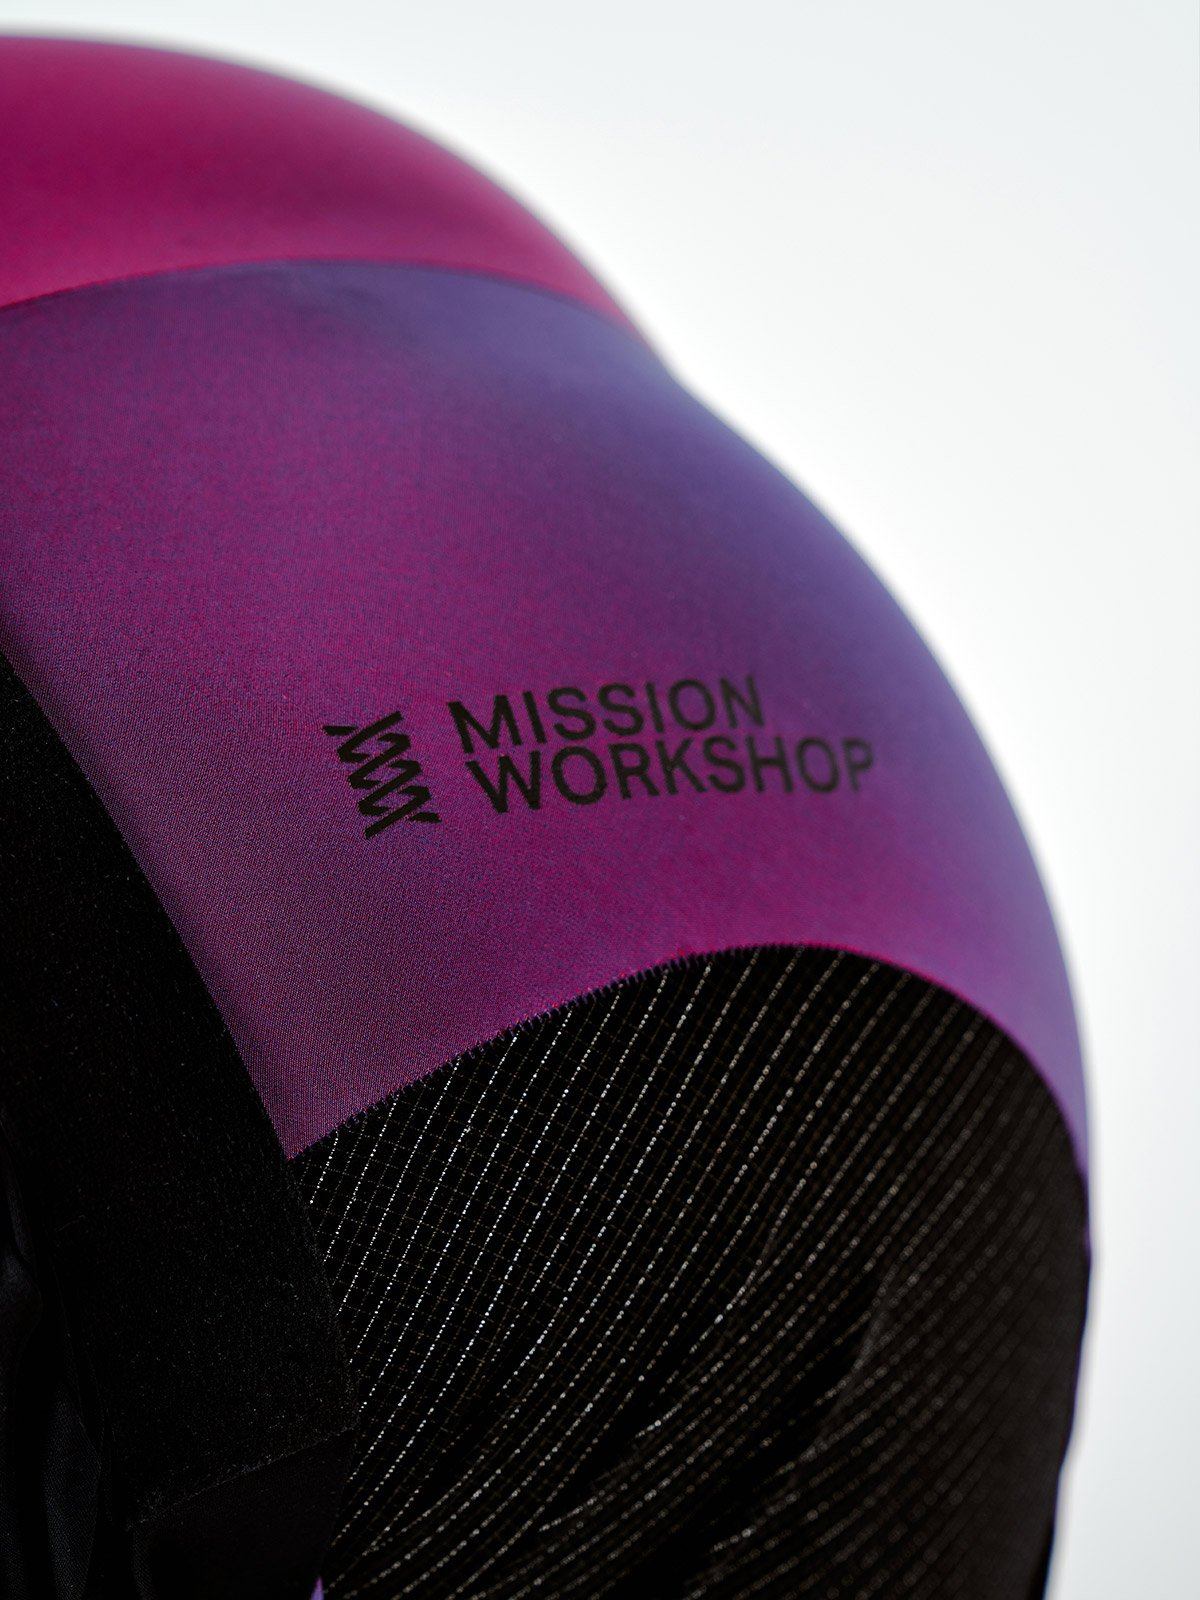 Mission Pro Bib Men's byMission Workshop - 耐候性バッグ＆テクニカルアパレル - サンフランシスコ＆ロサンゼルス - 耐久性に優れた作り - 永久保証